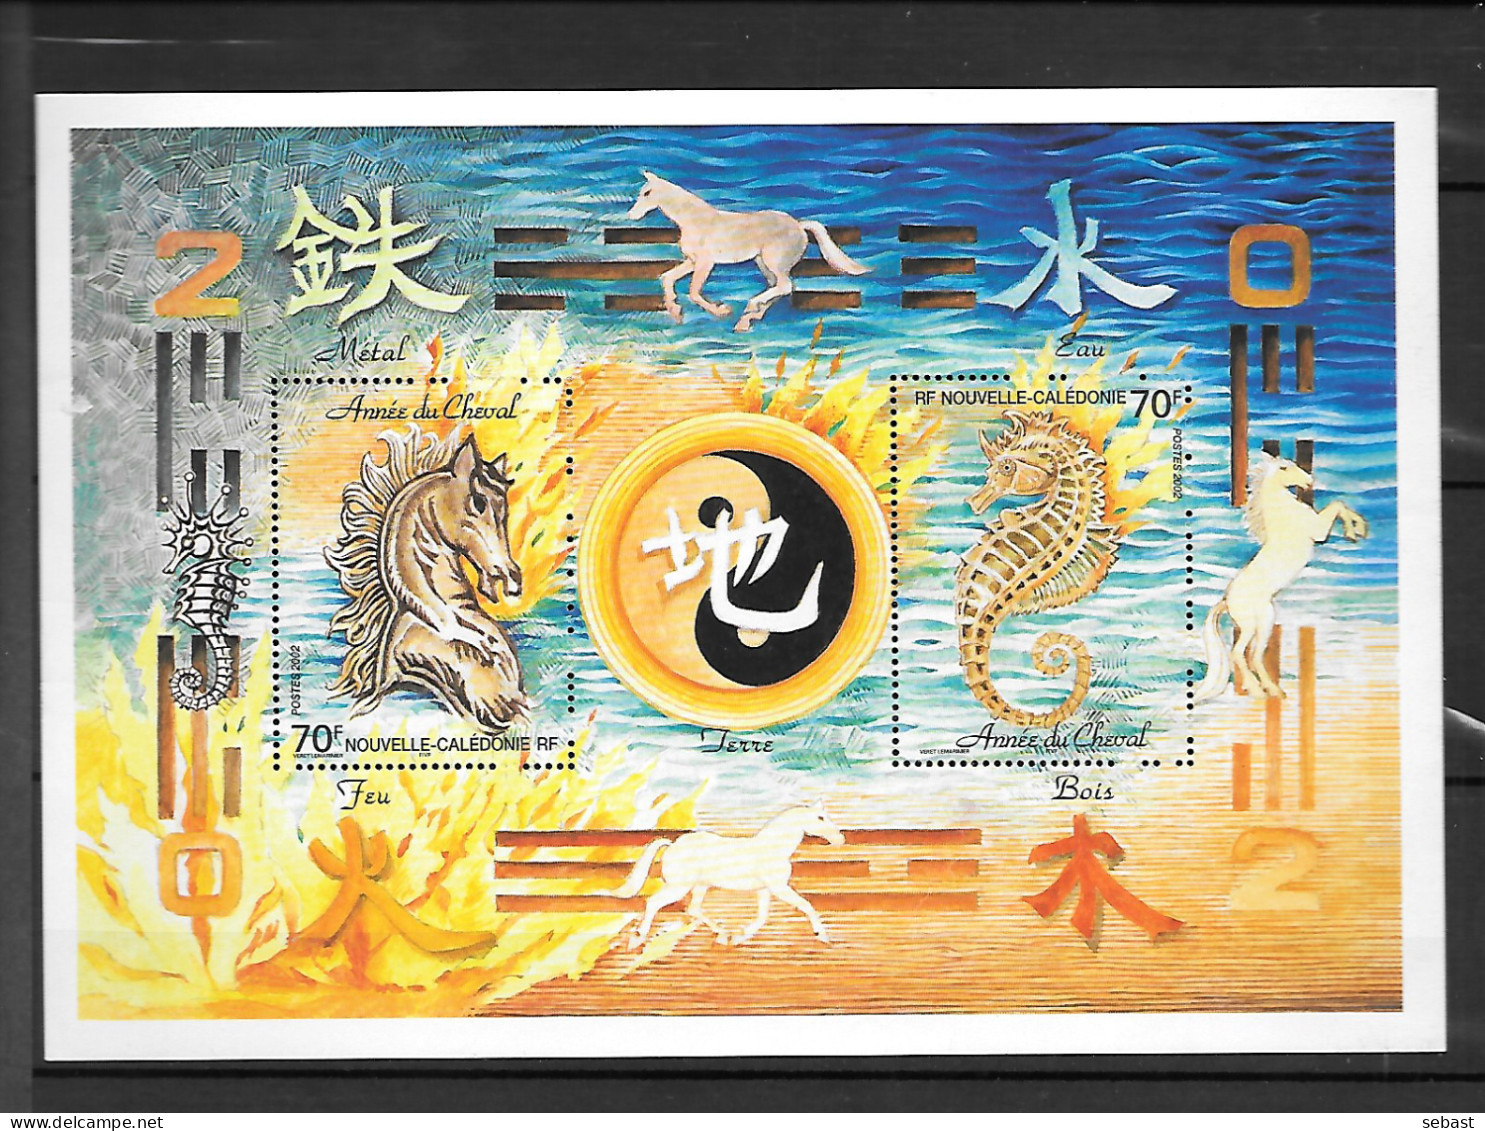 BLOC NEUF DE NOUVELLE CALEDONIE DE 2002 N° YVERT 26 - Used Stamps